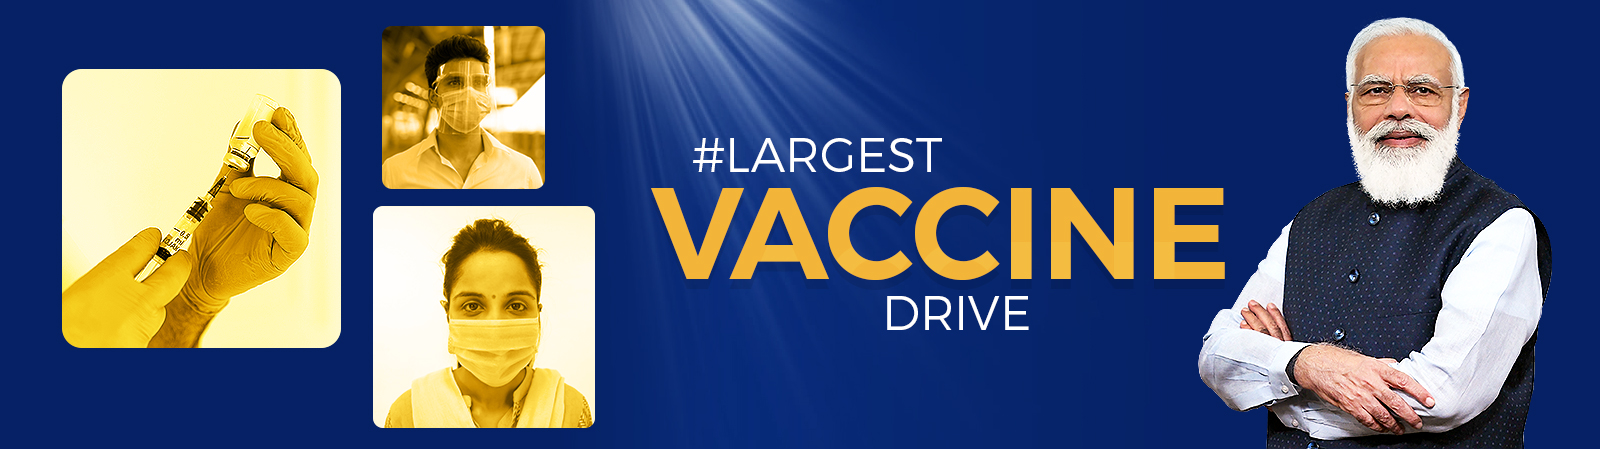 largest-vaccine-banner.jpg